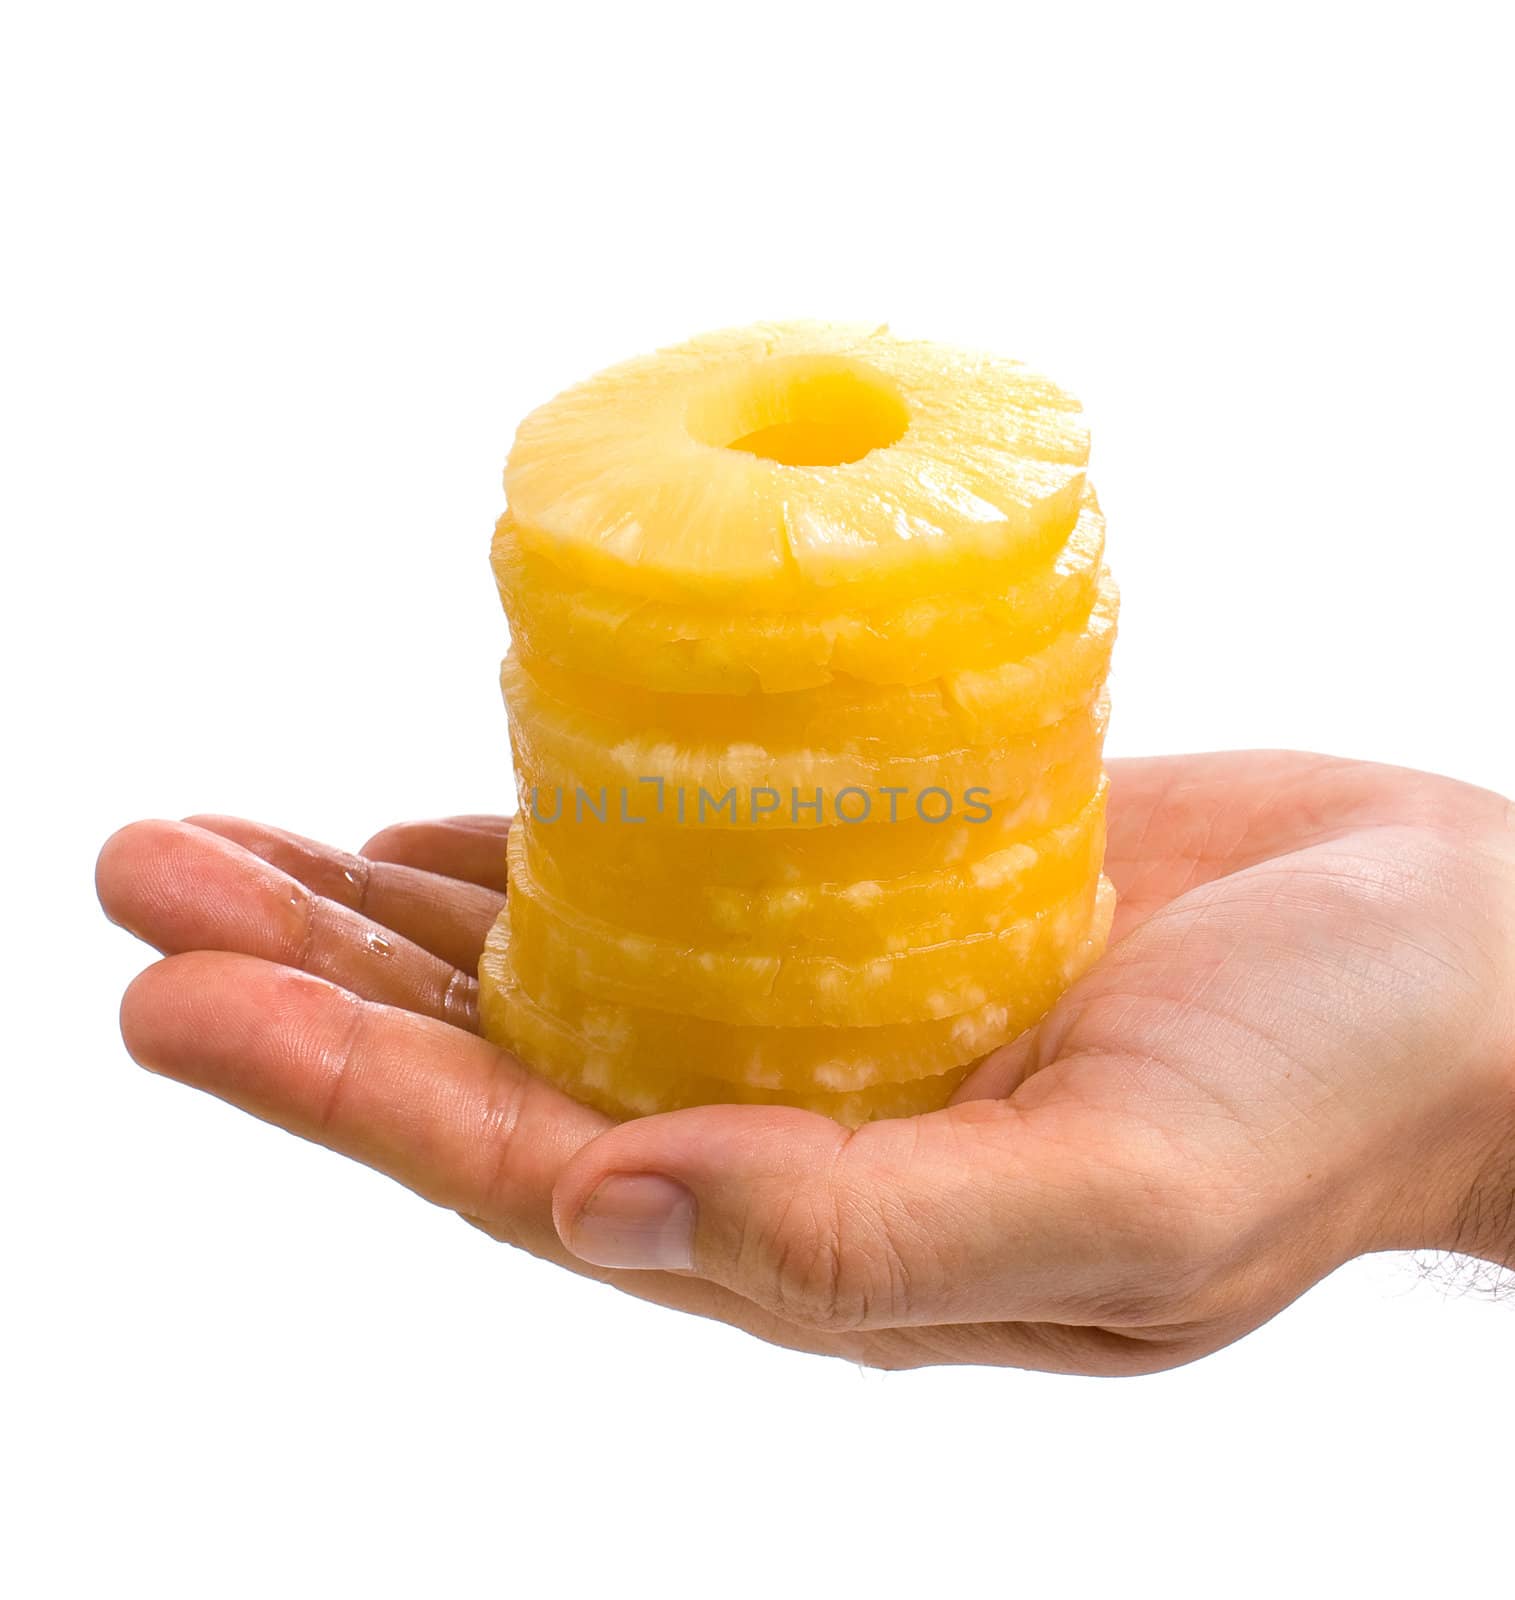 pineapple ring in hand by oleg_zhukov